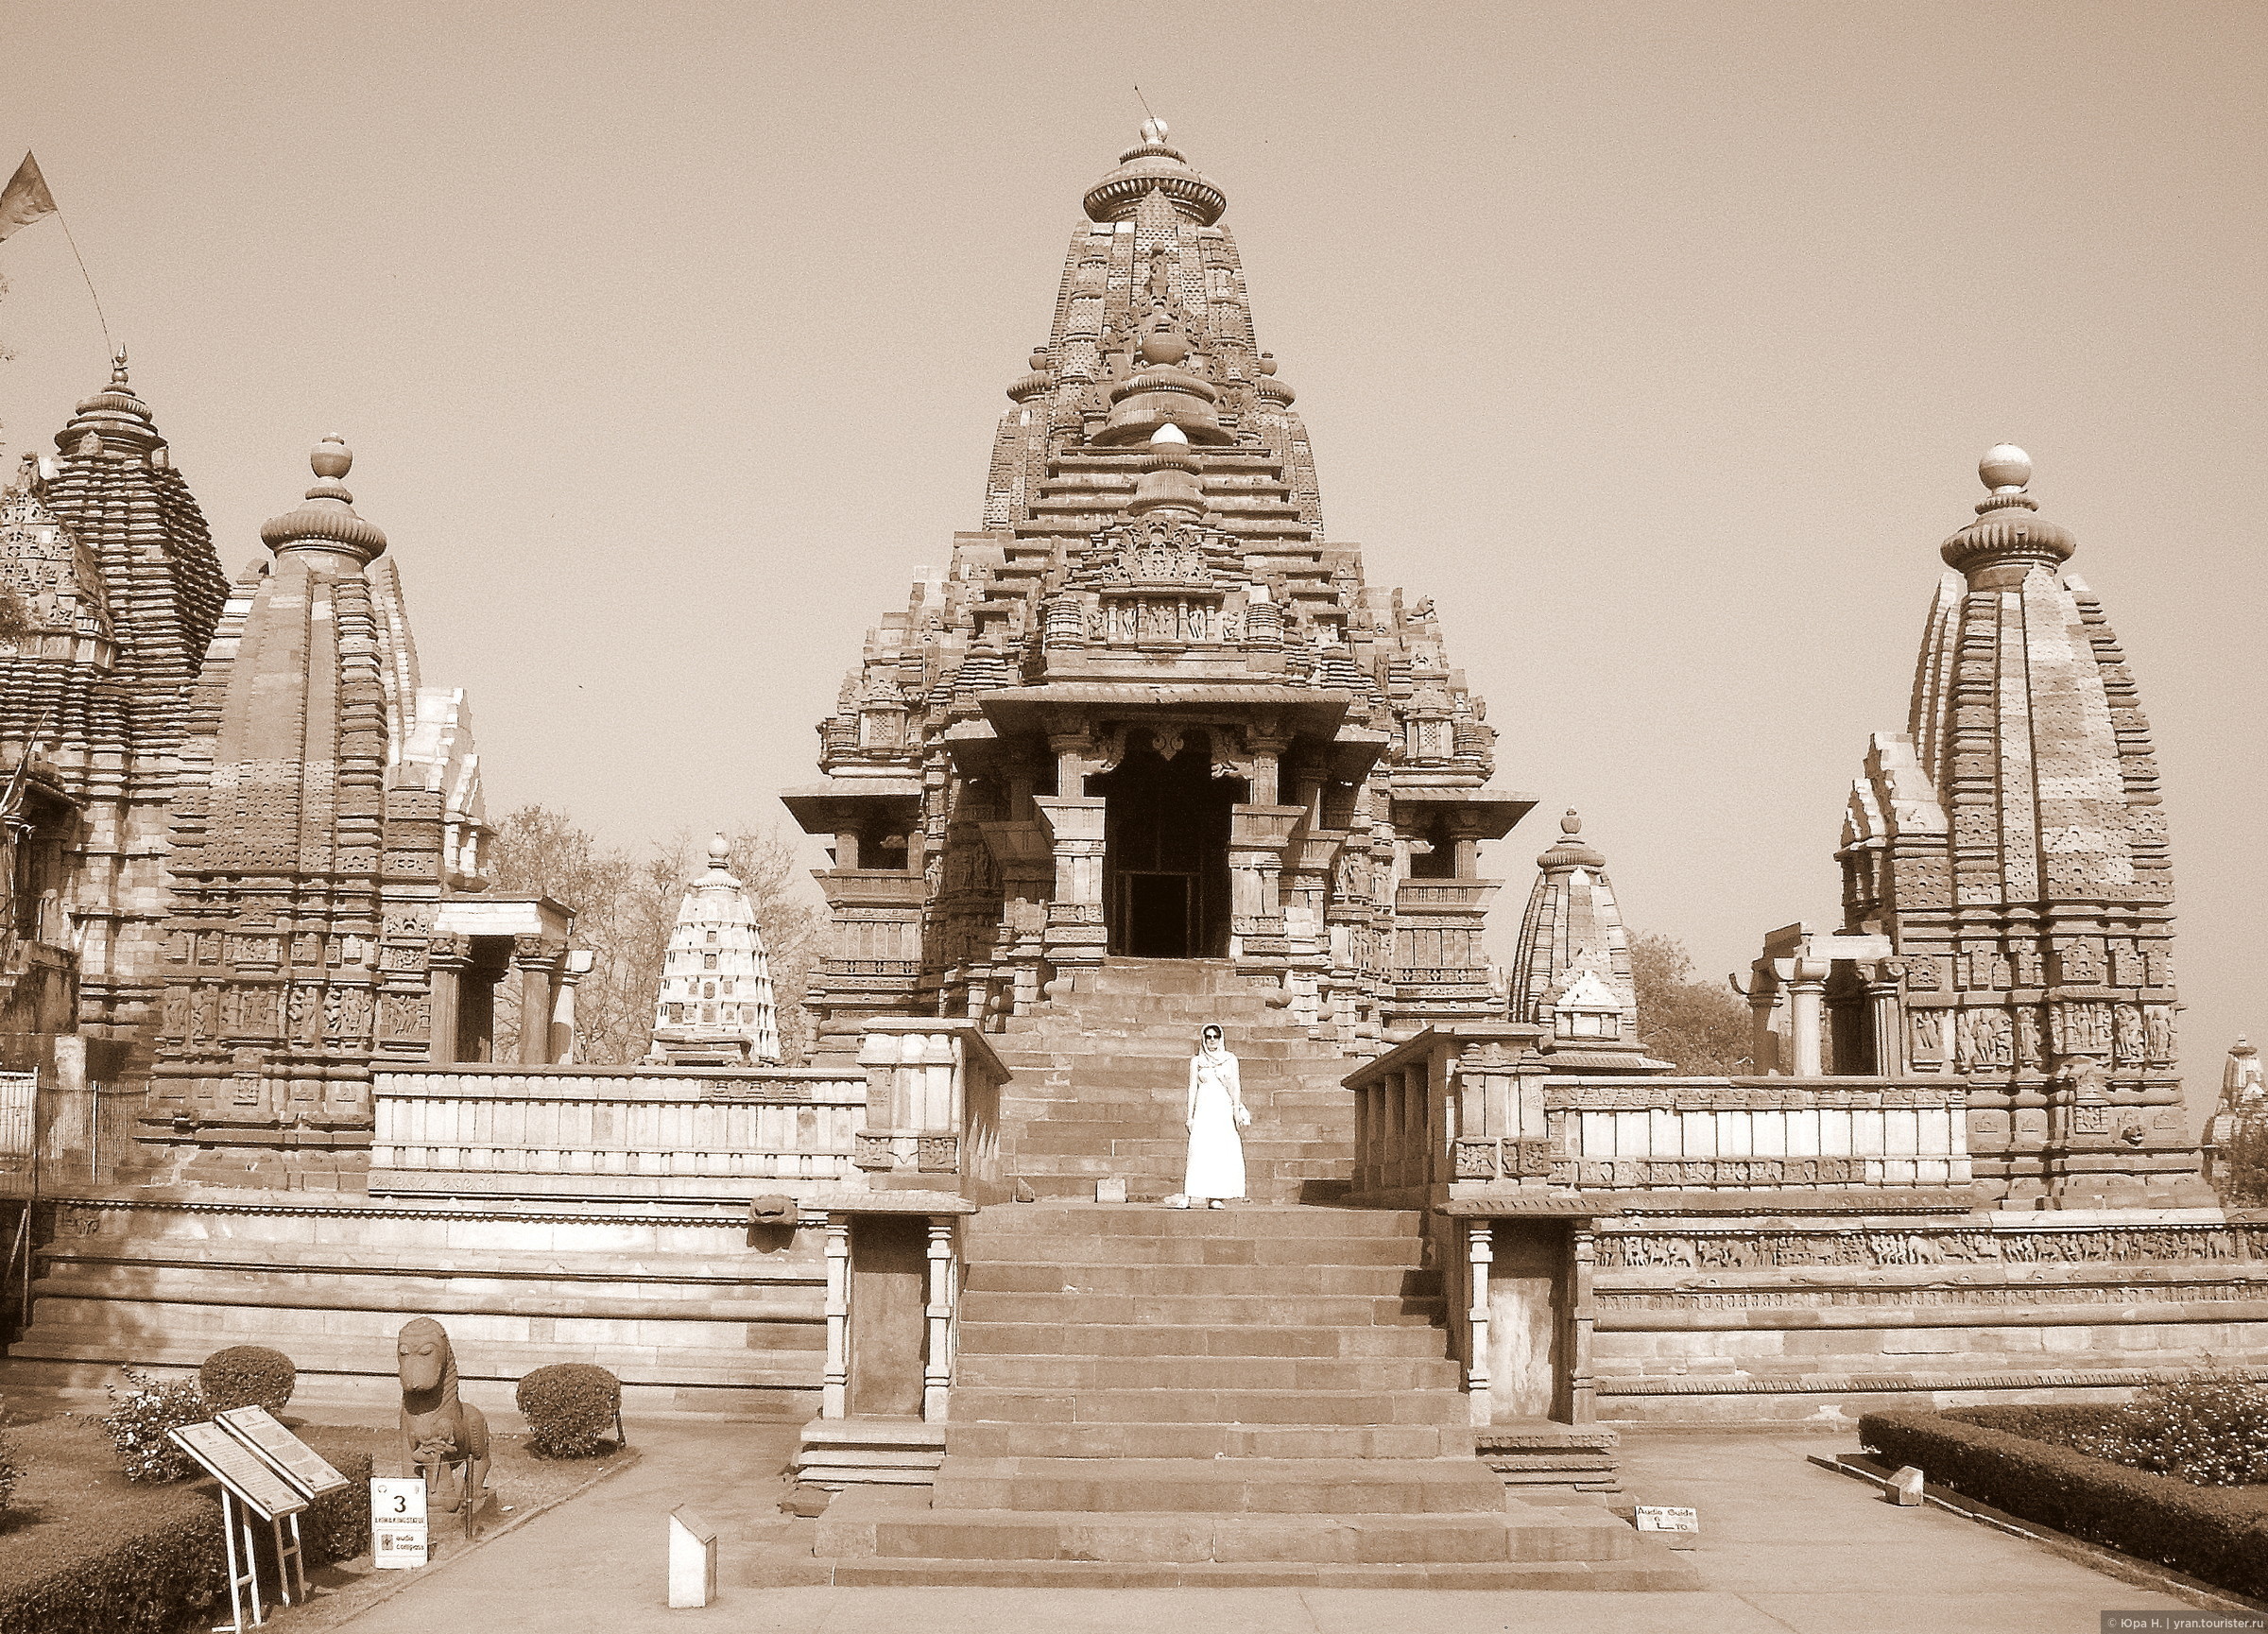 Temple of love. Храм Лакшмана в Индии. Храм Вишну в Индии. Temple of Love rasa.